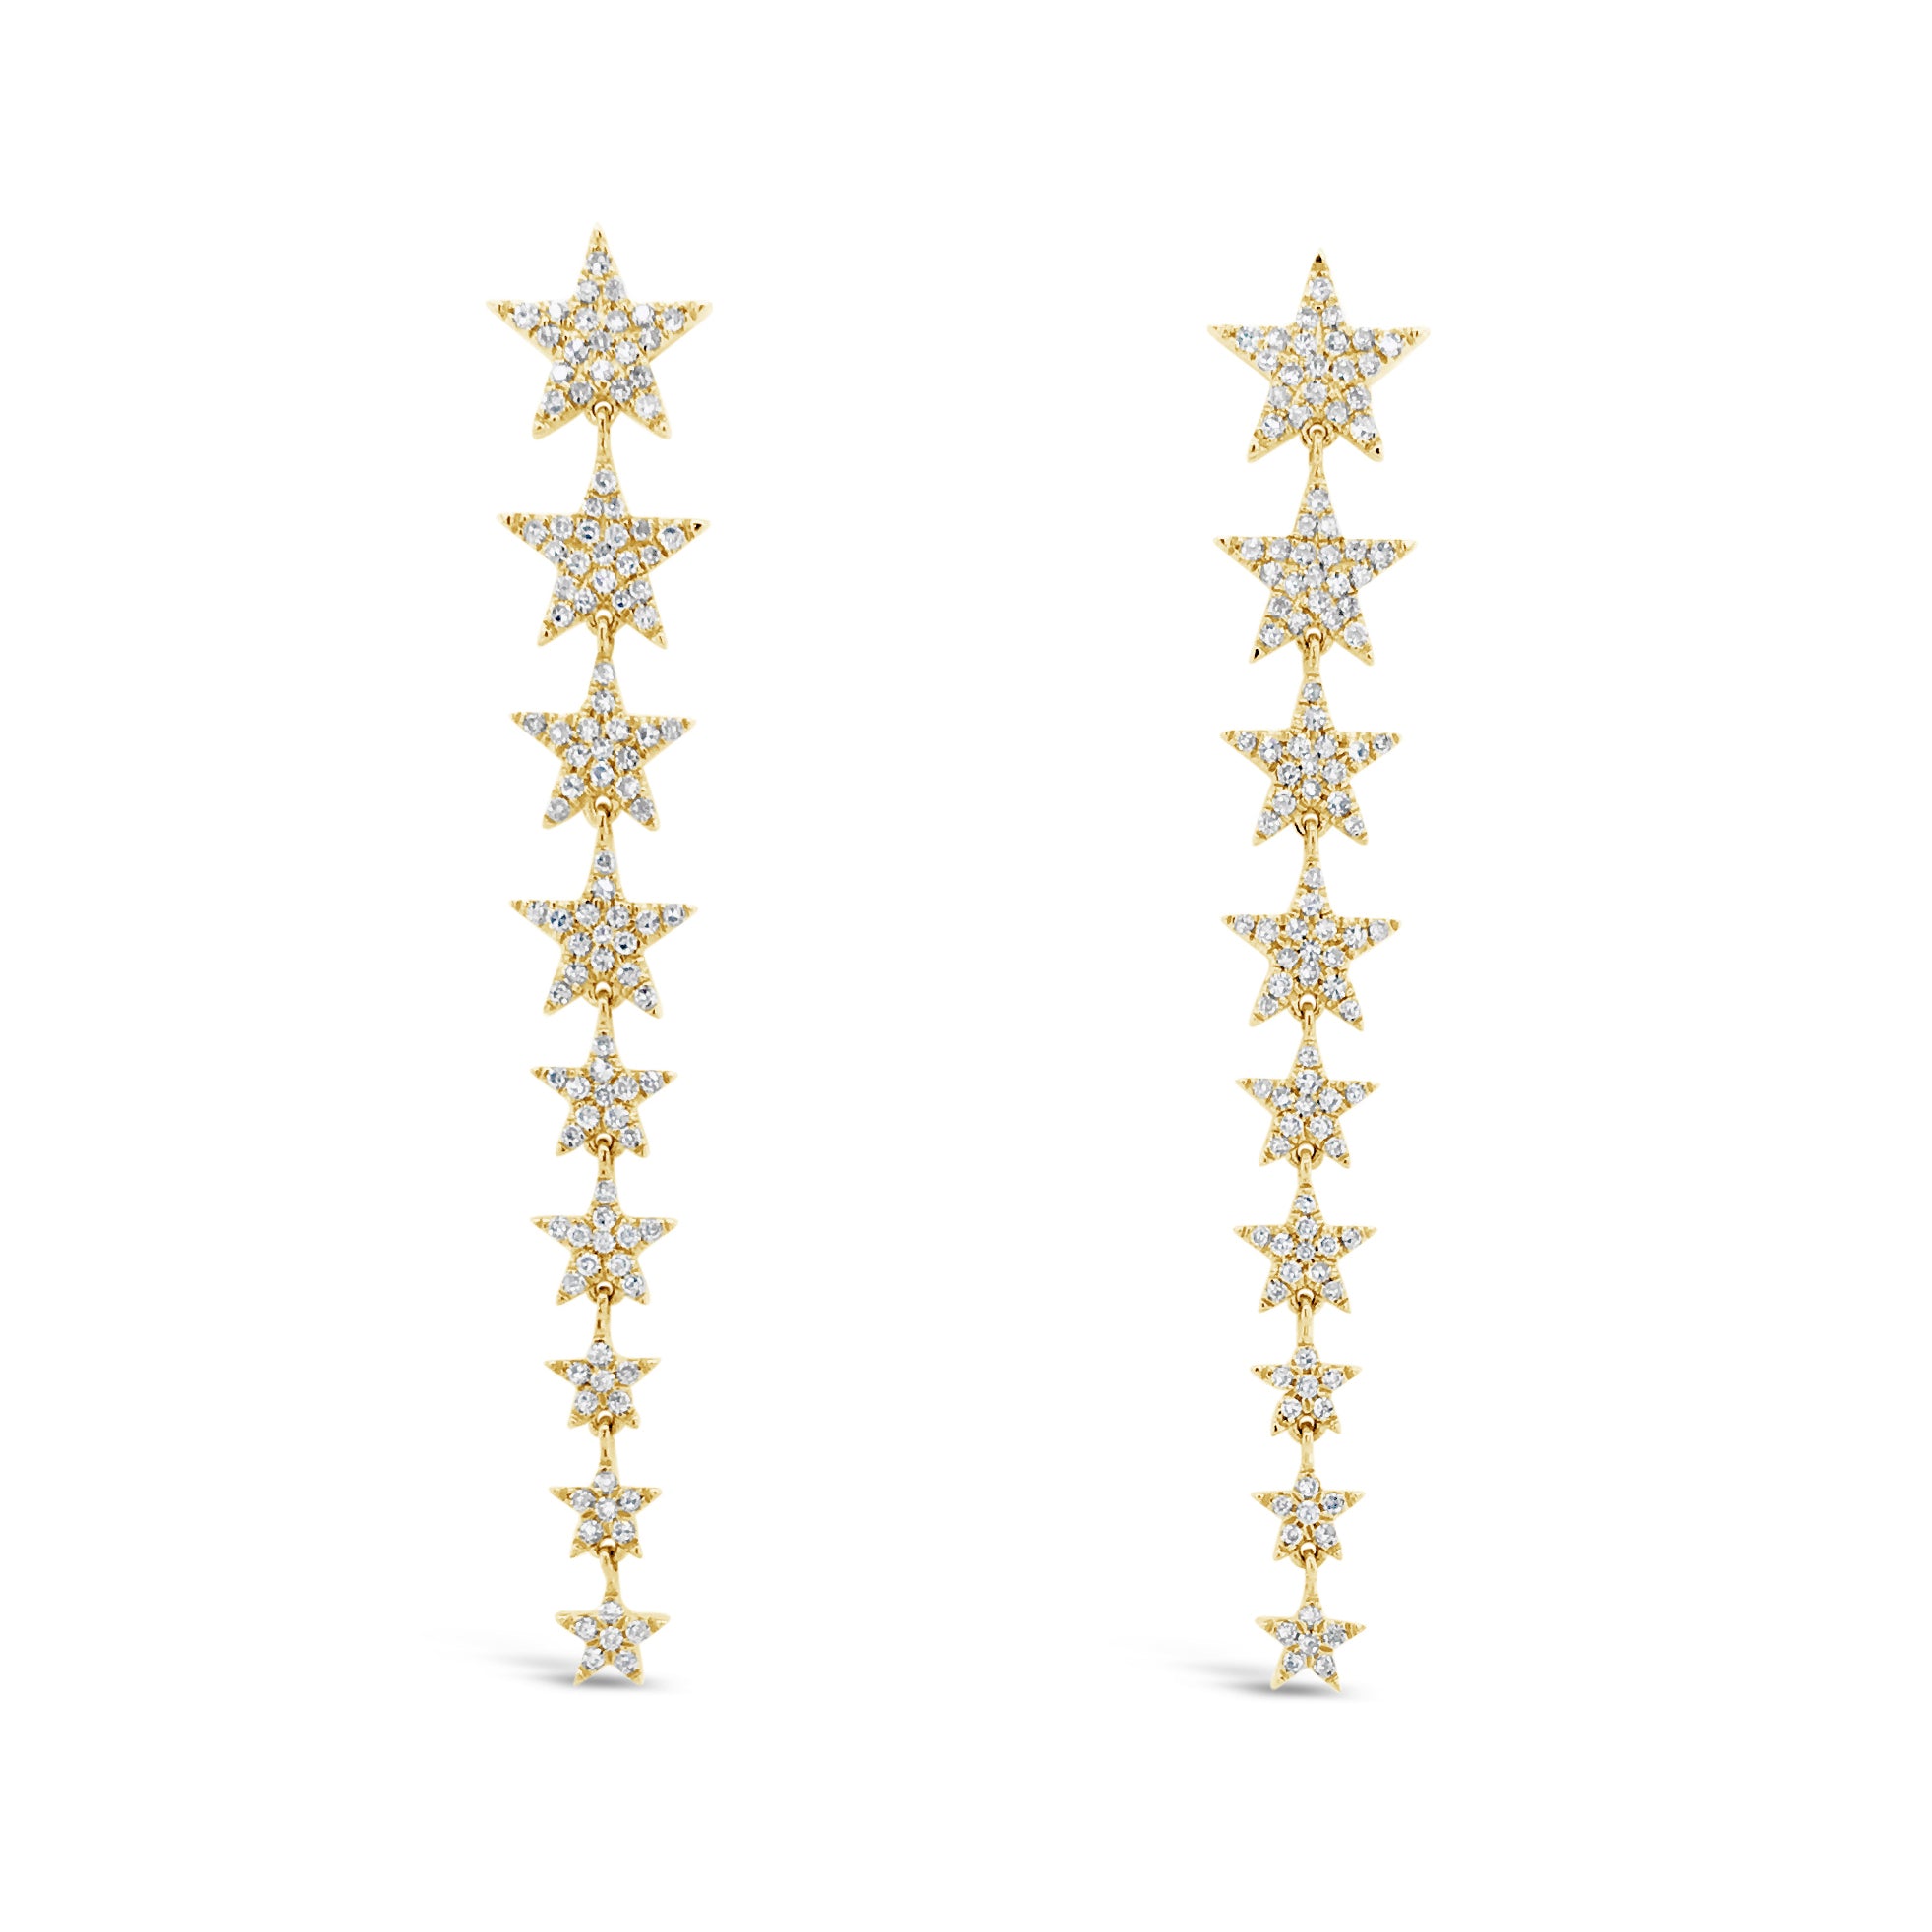 Diamond Long Star Dangle Earrings  -14K gold weighing 3.93 grams  -228 round pave set diamonds totaling 0.97 carats 